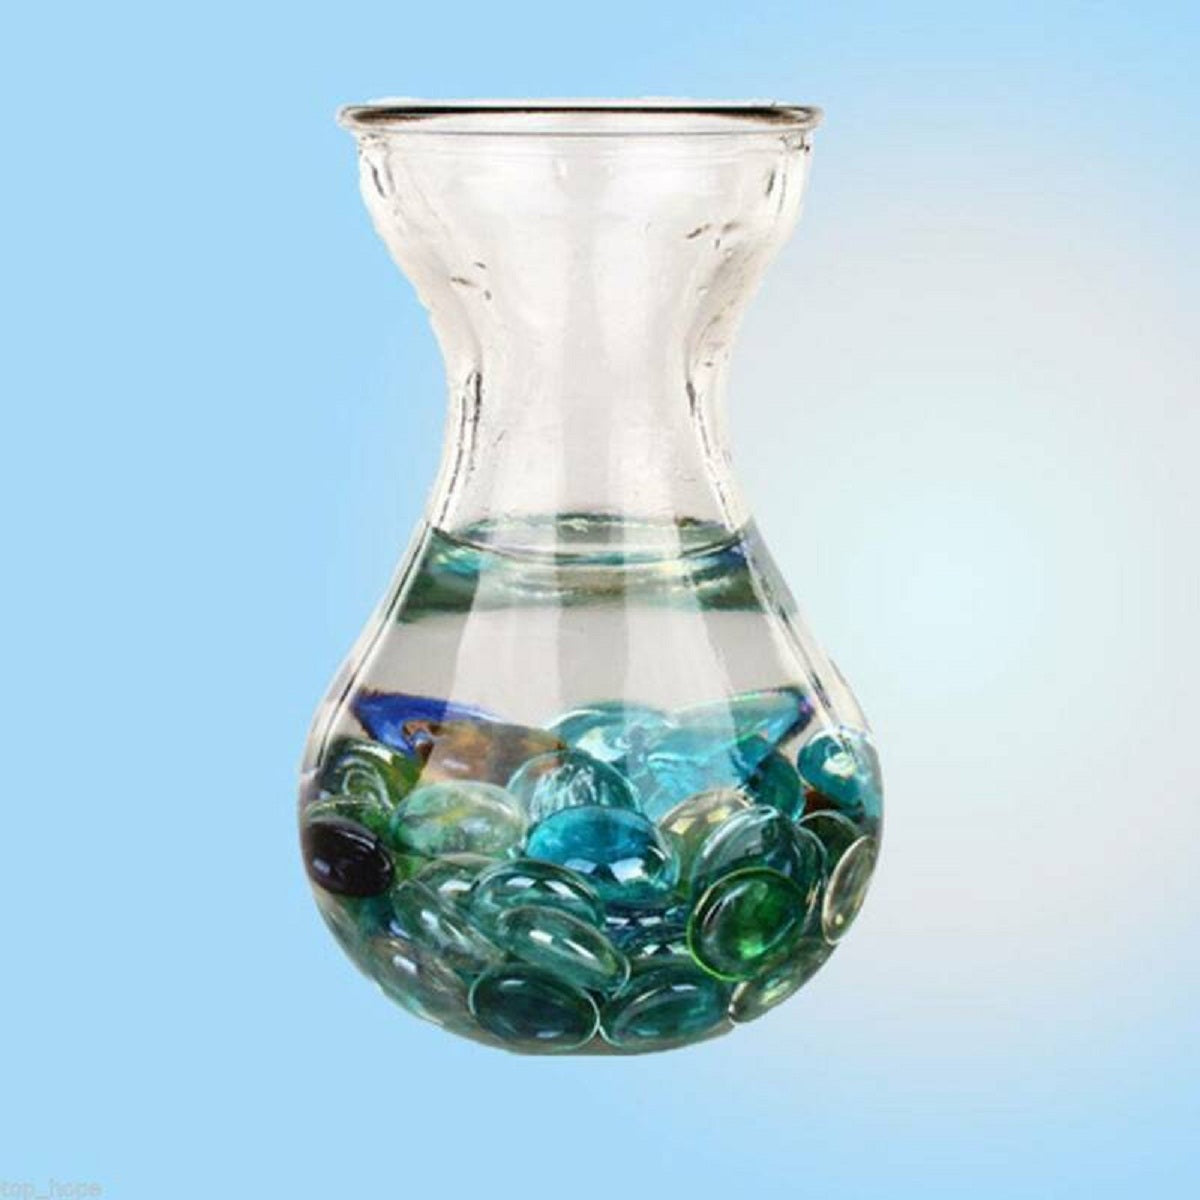 Despacito® Glass Gem Stone, Flat Round Marbles Aquarium Pebbles for Vase Fillers, Landscaping, Crystal Rocks Approx 200 Pcs (Multi Color)